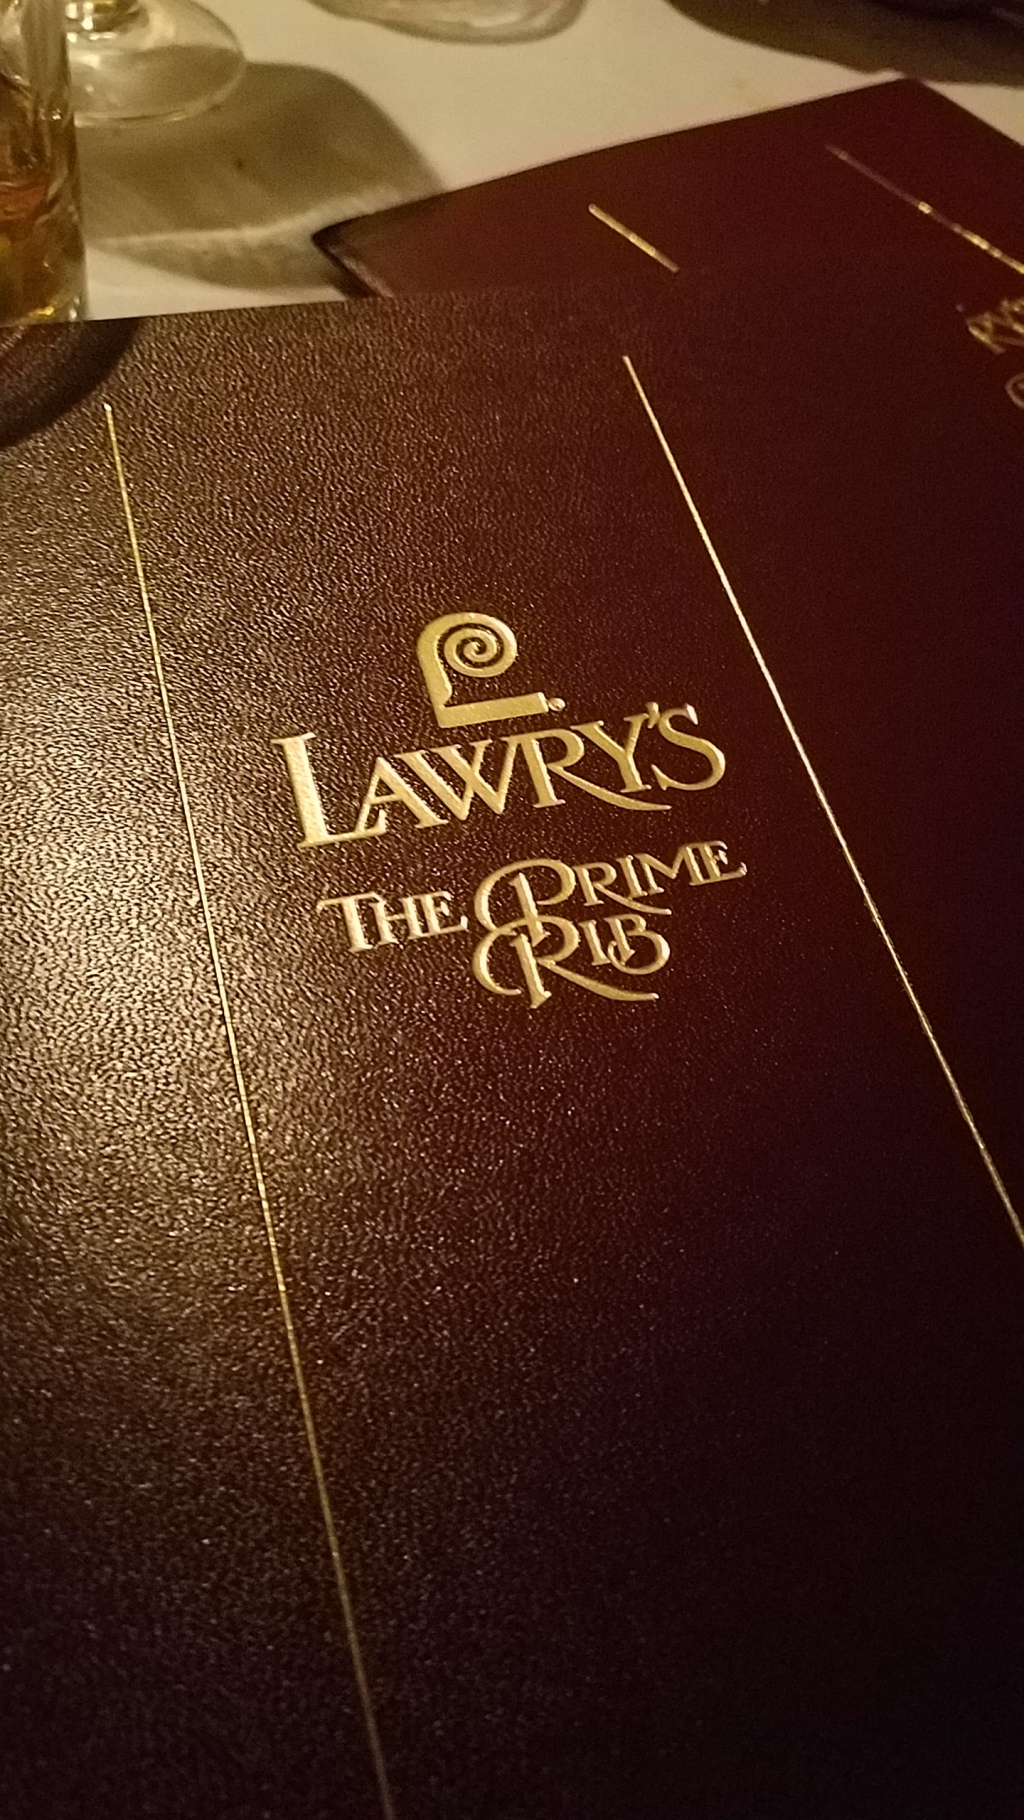 Lawry’s Steak House, Chicago Illinois